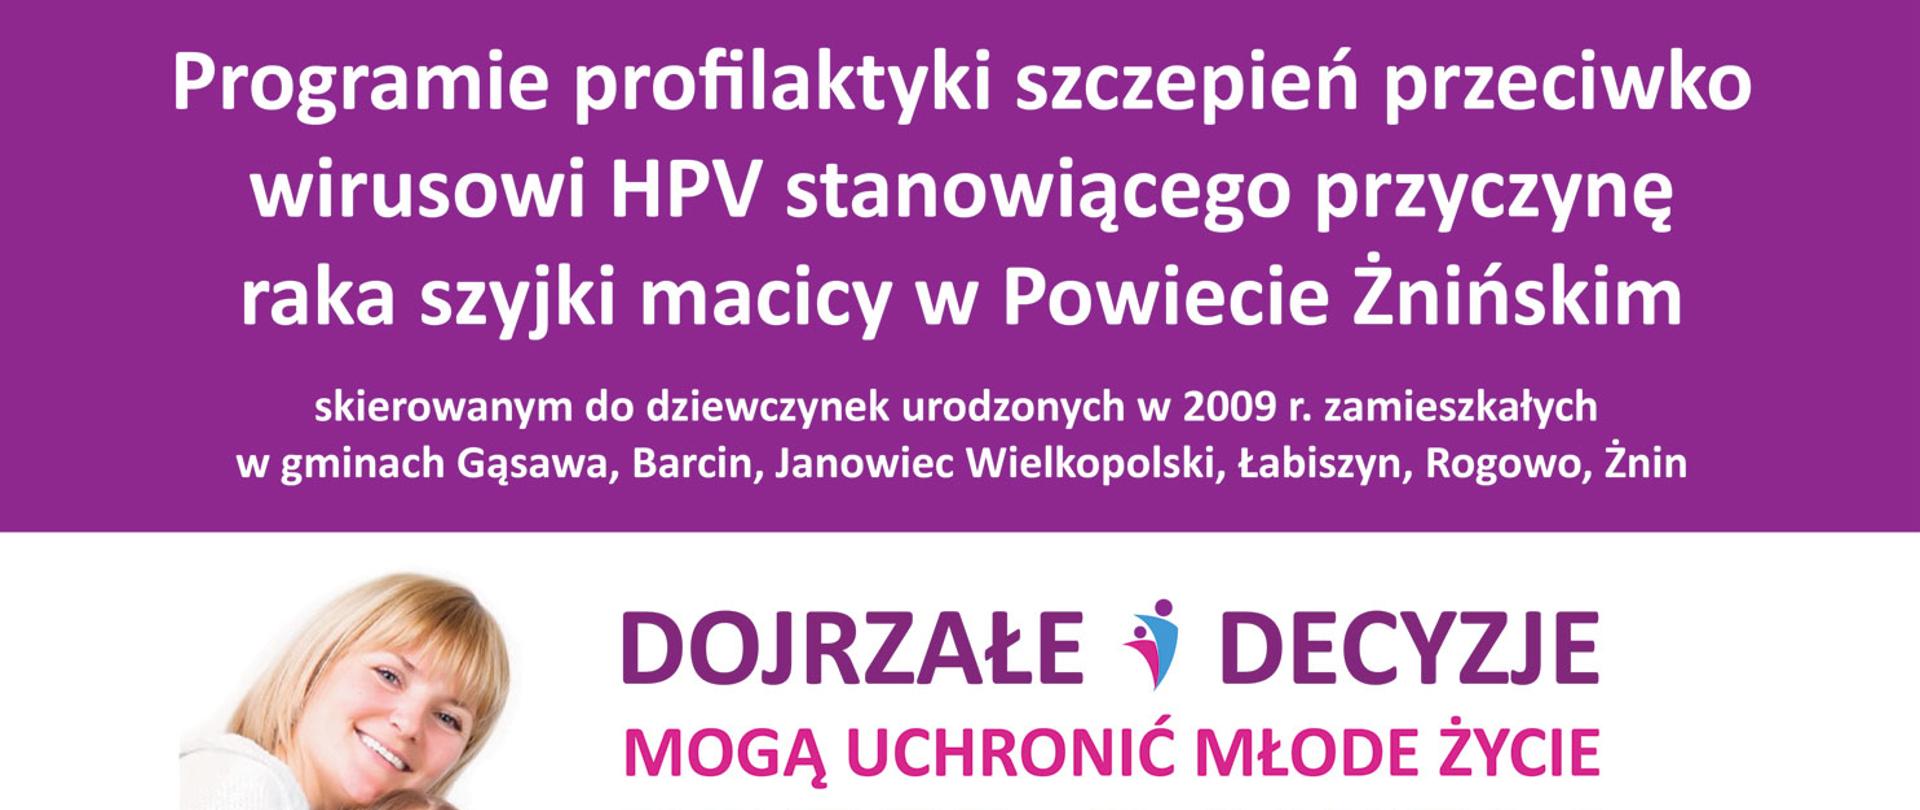 HPV plakat